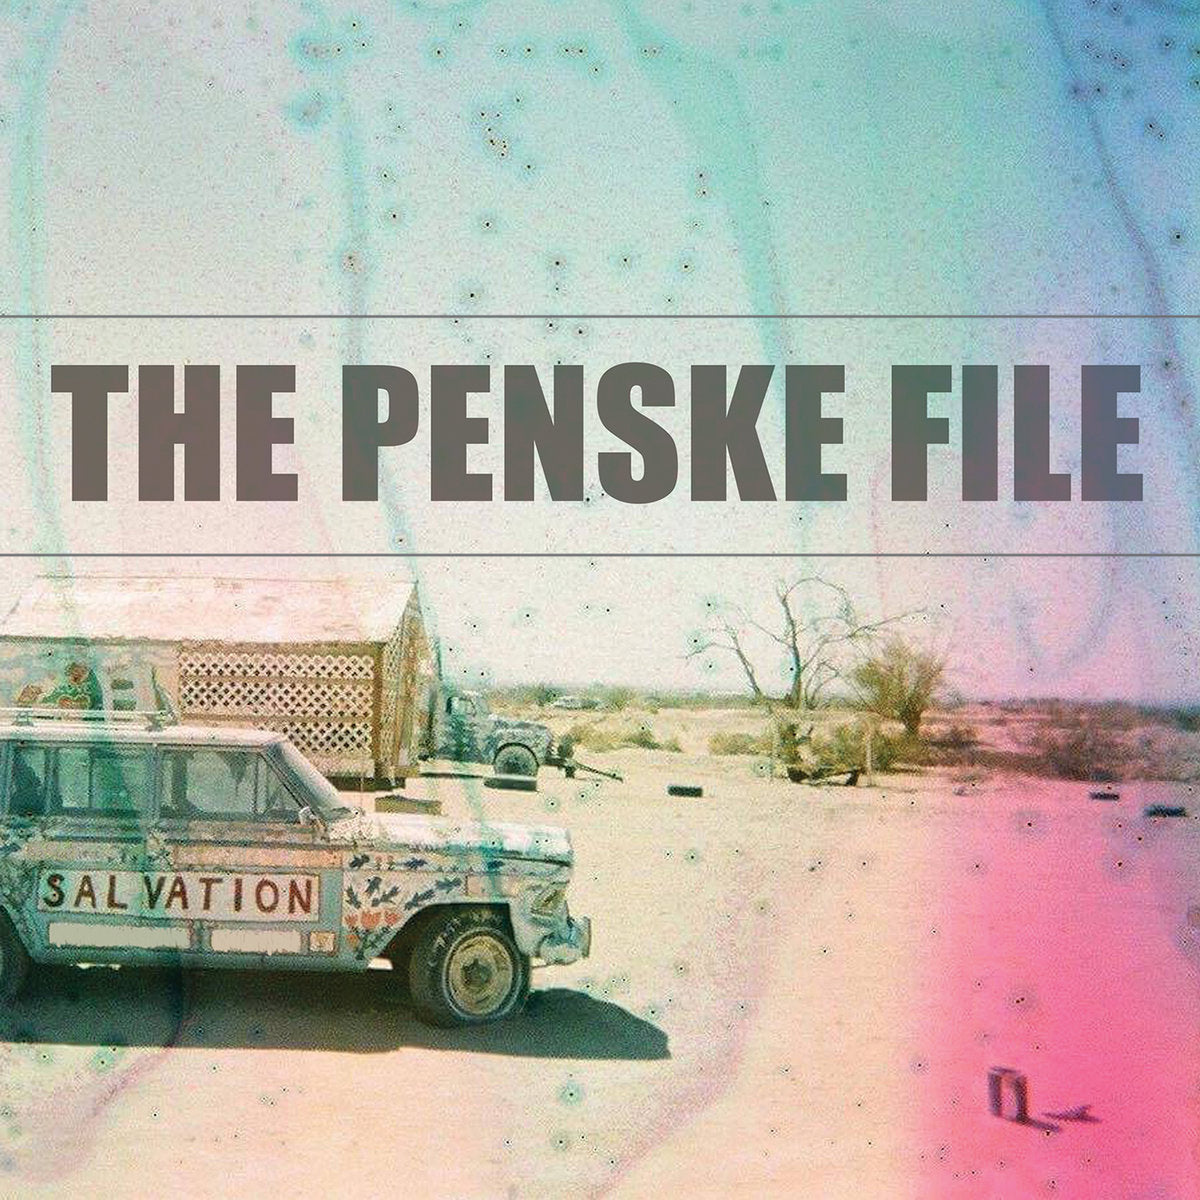 THE PENSKE FILE • Salvation • LP